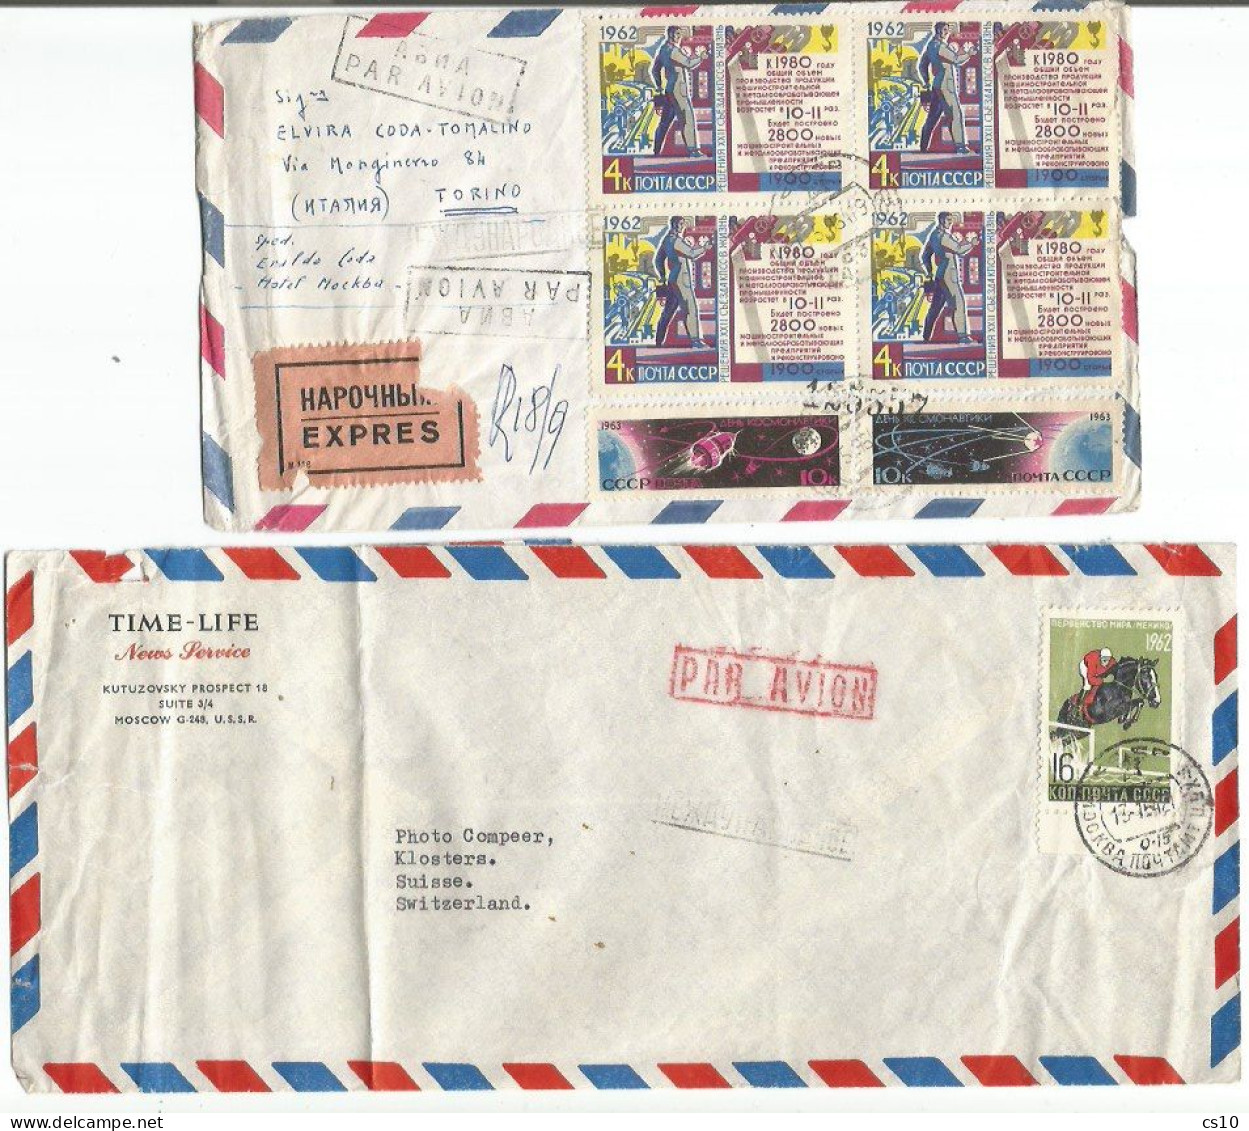 Russia Empire & USSR Postcards & Postal History Lot in 34 pcs including Scarce Propaganda Reg to Libya (18scans)